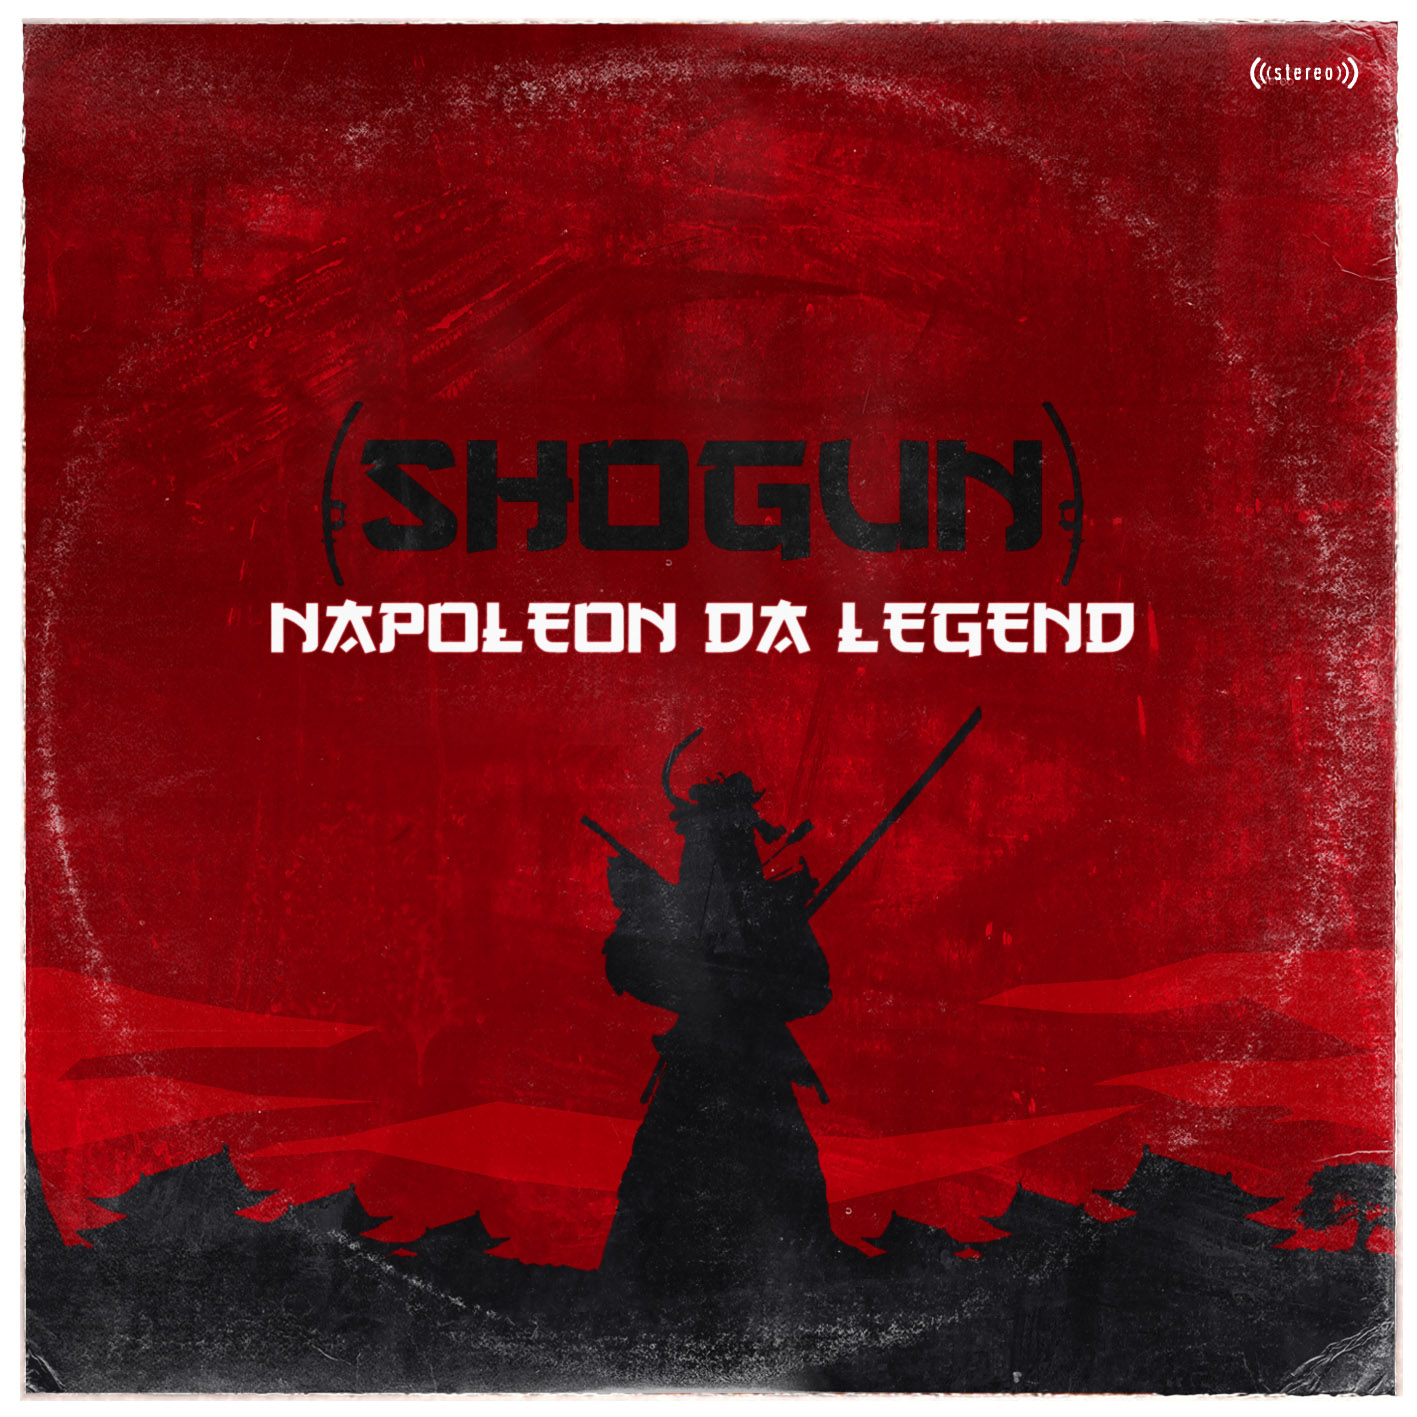 Shogun обложка альбома. Легенда о Наполеоне. Legend Music. Legend песня. Legend soundtrack